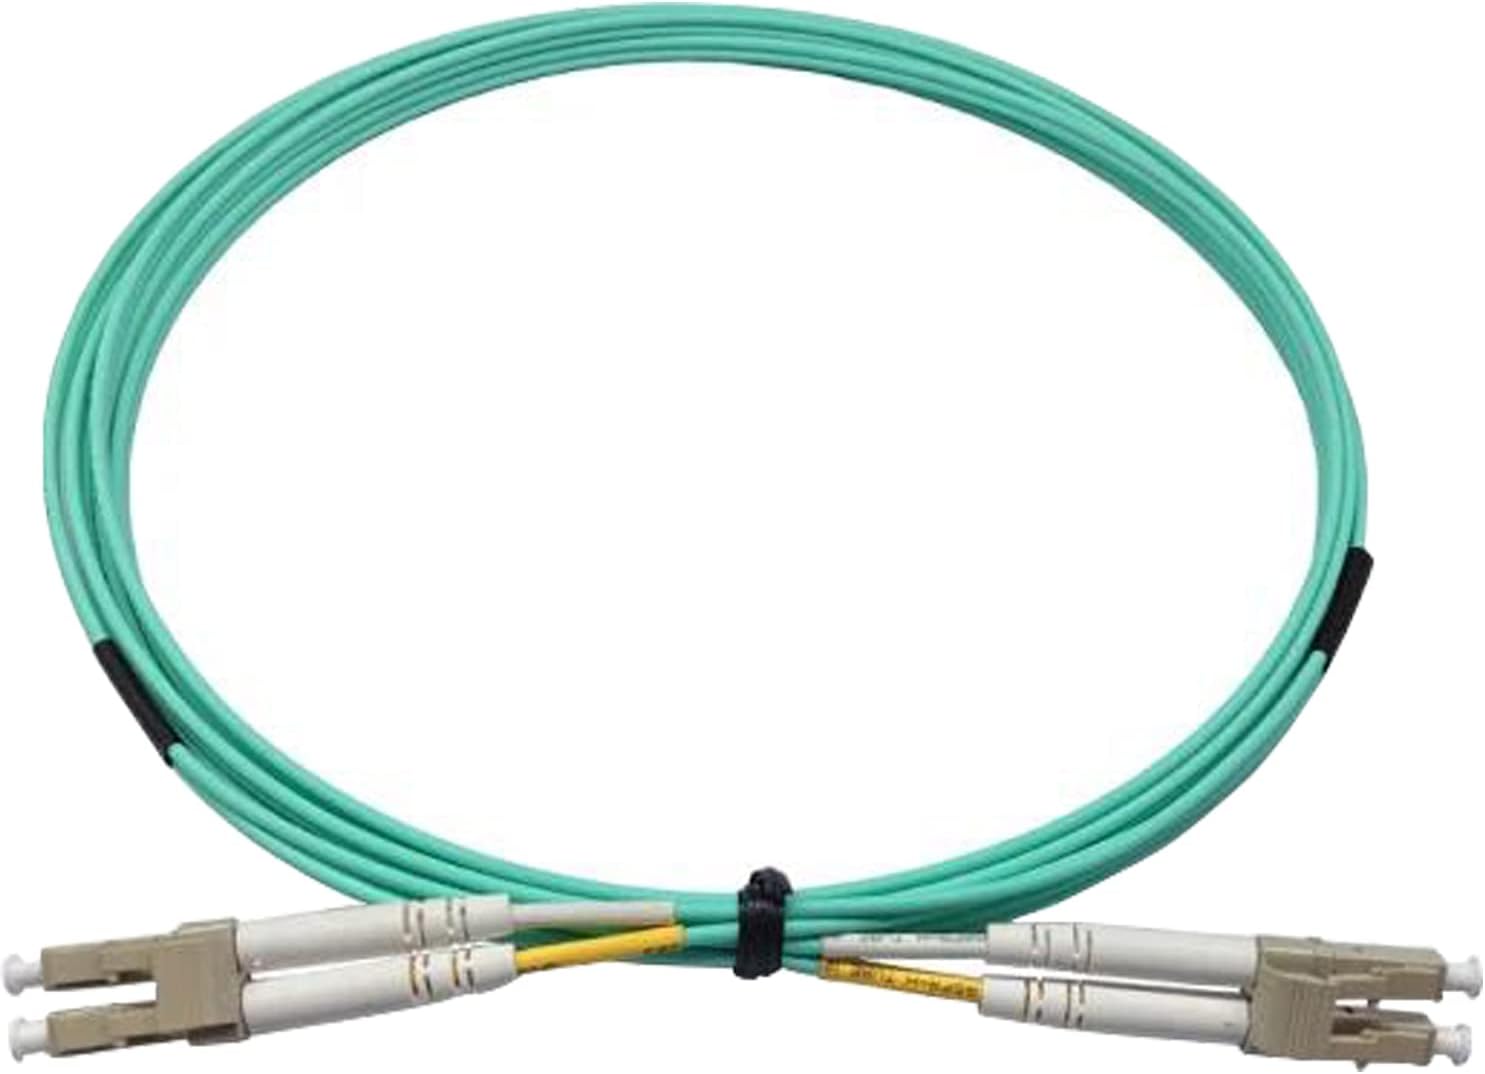 Multimode Fiber Optic Cord LSZH 0.5 Meter(1.64ft)